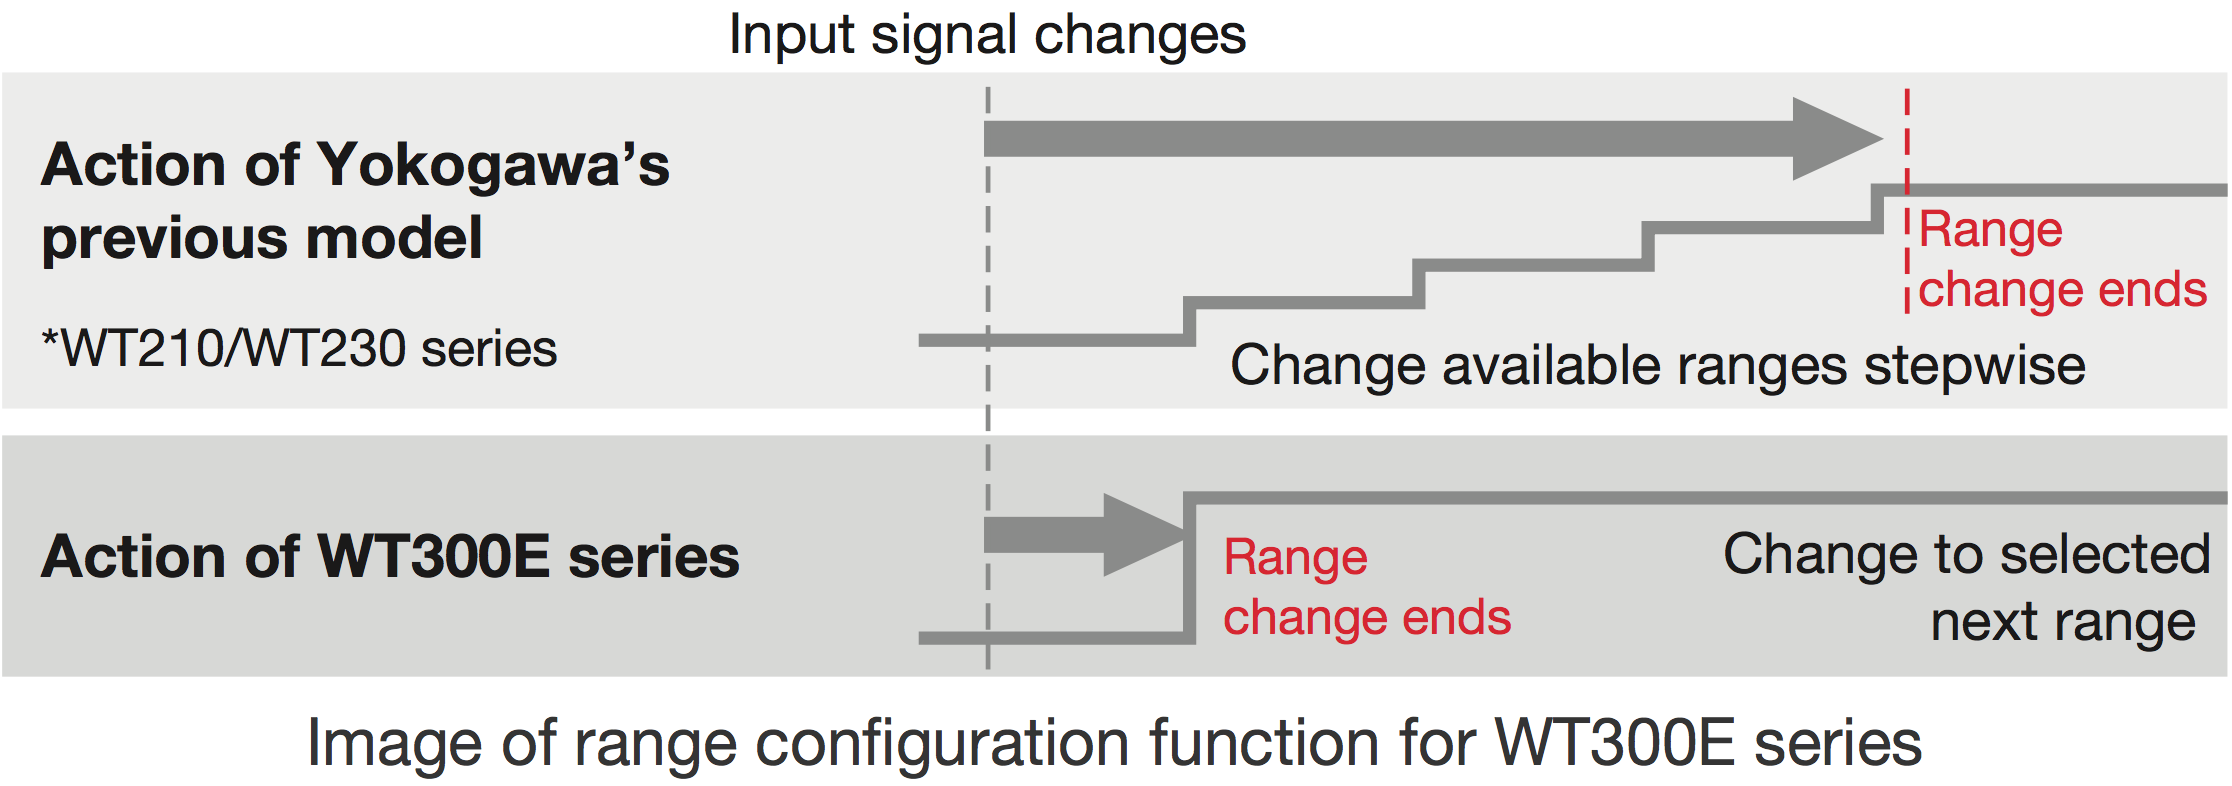 3_Input_Signal_Changes